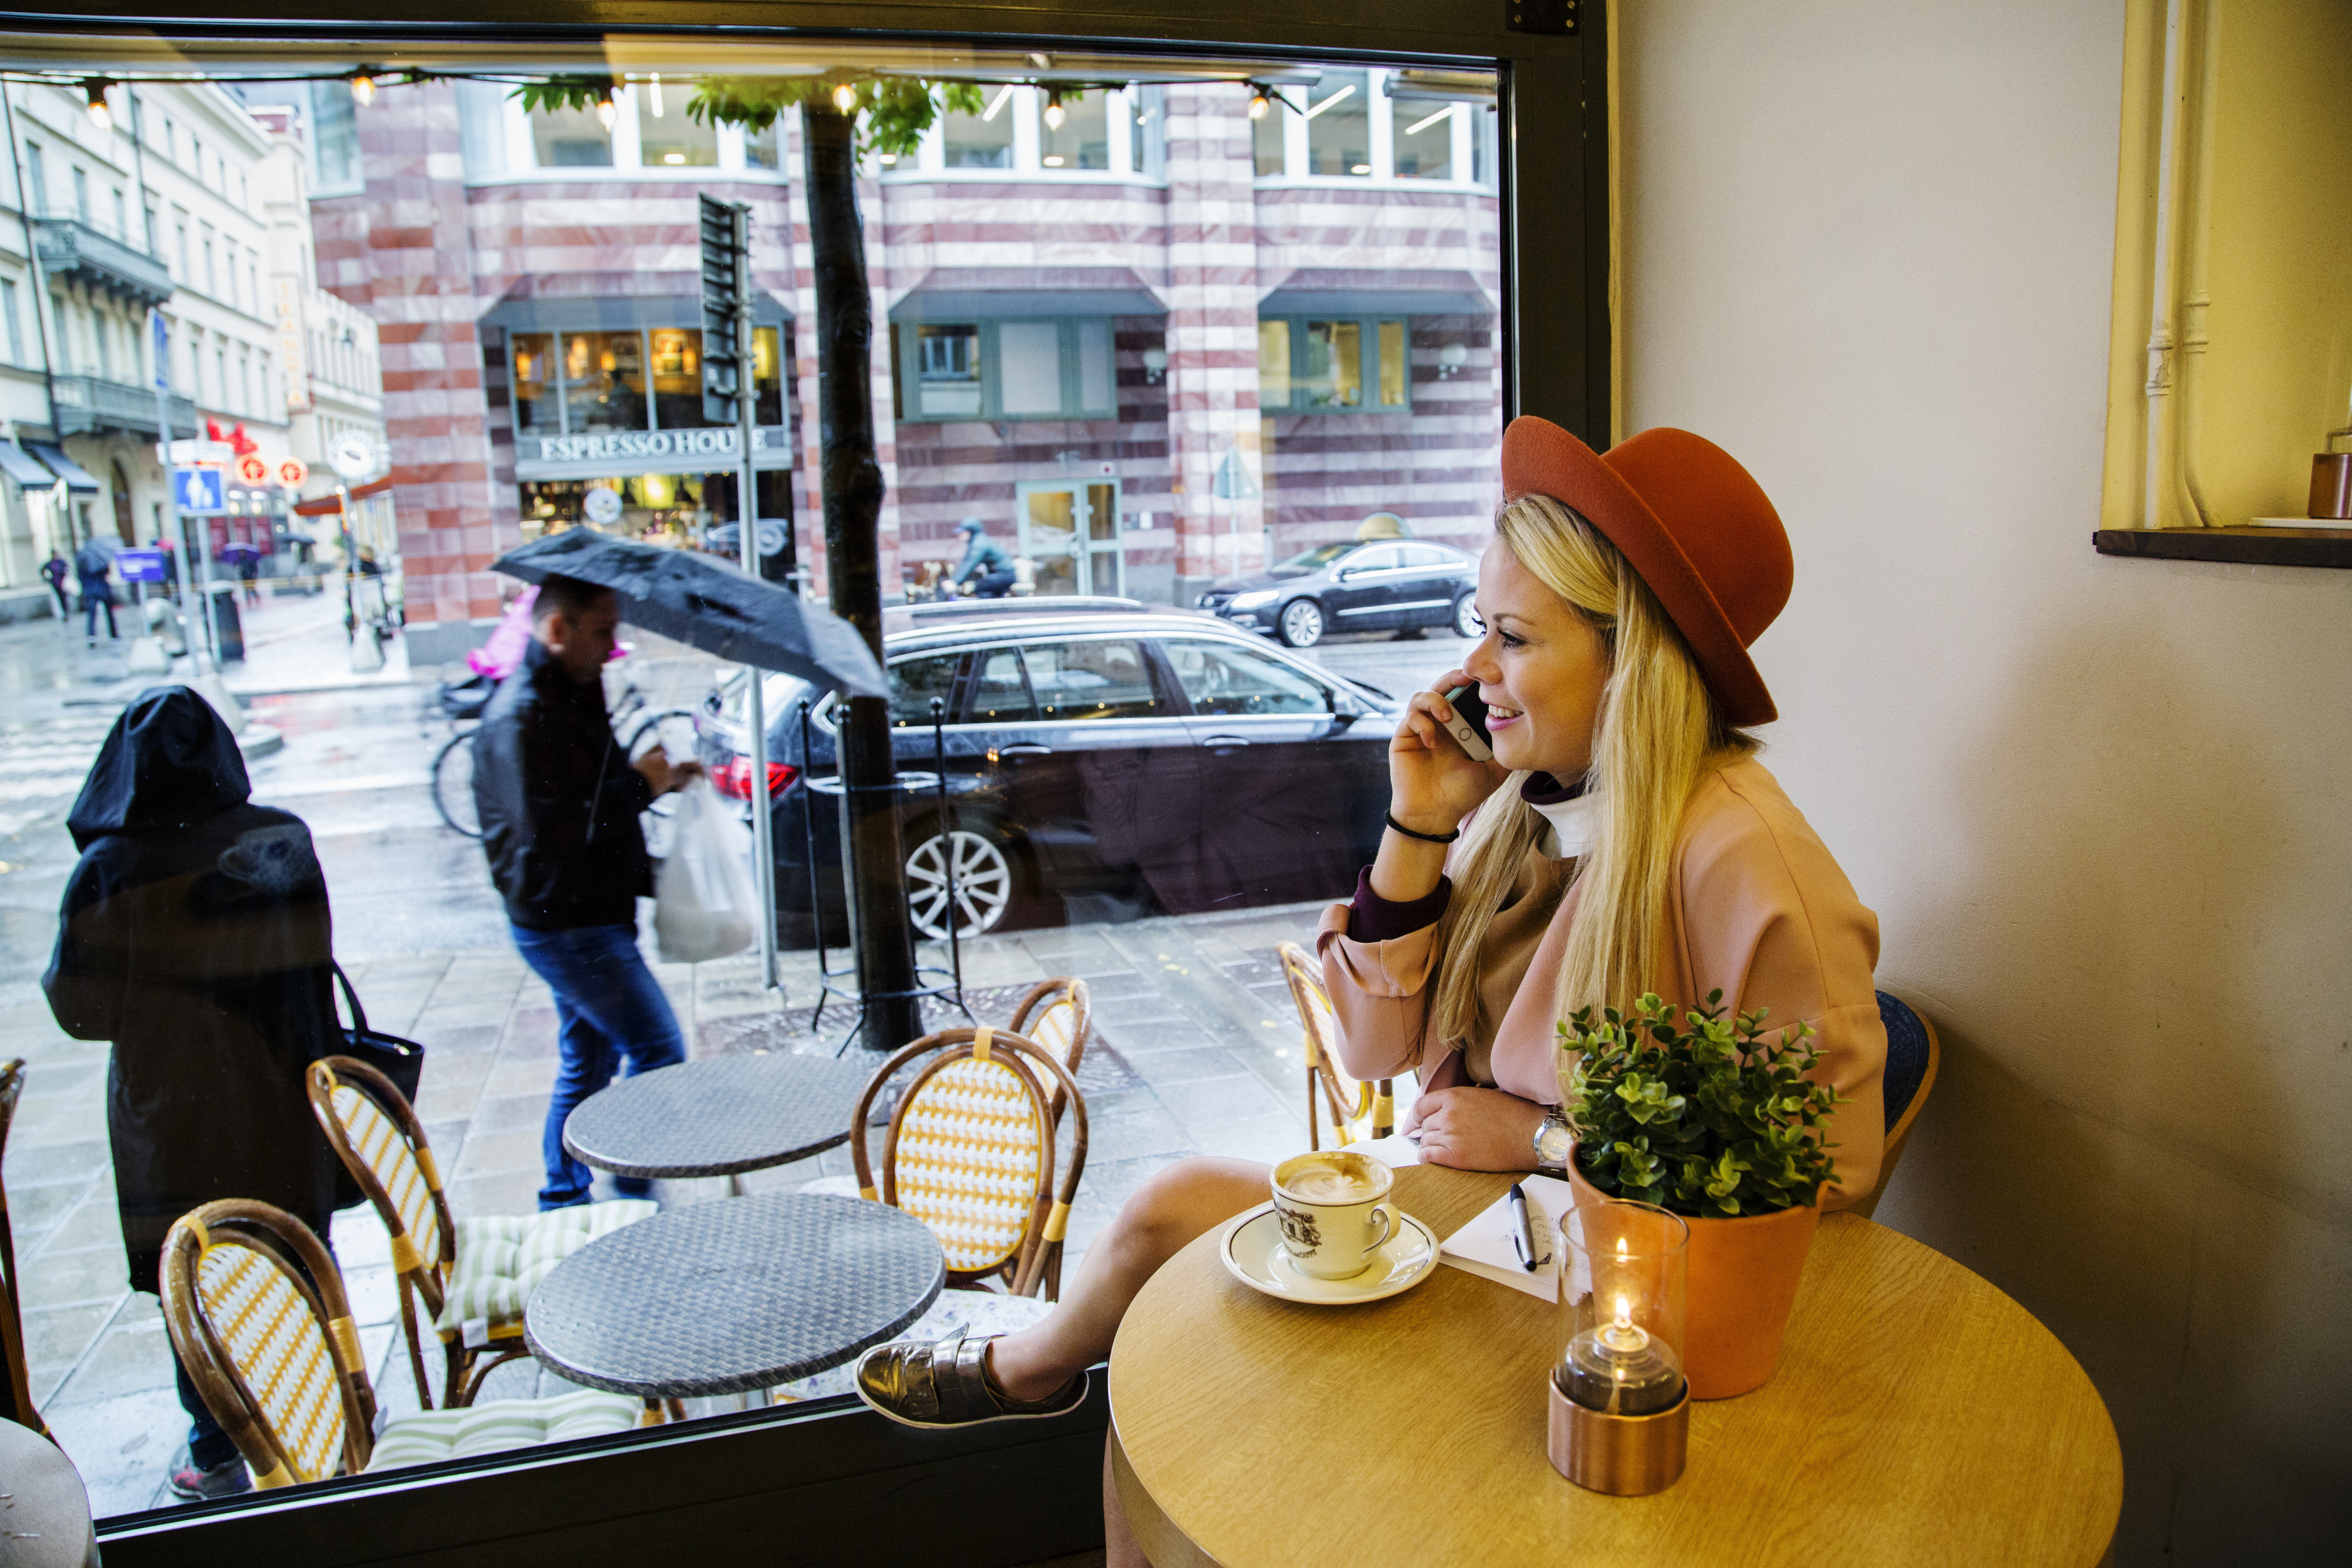 Sofie Lindblom on the phone in a café